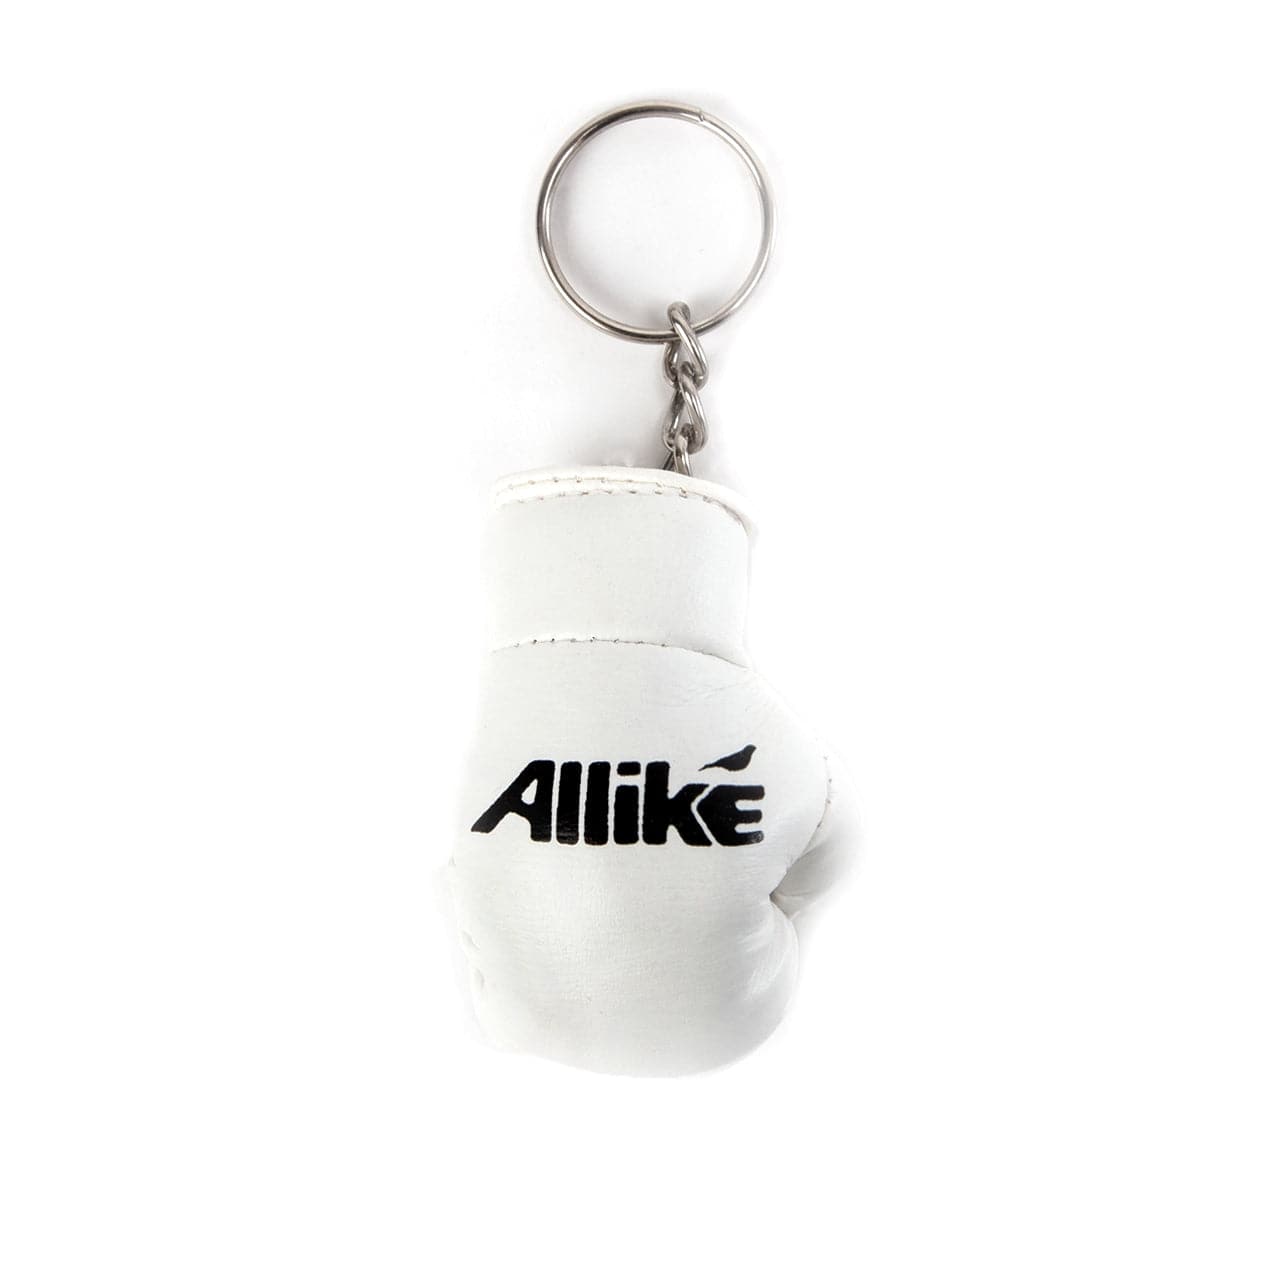 Image of Allike Boxing Glove Keychain (White)